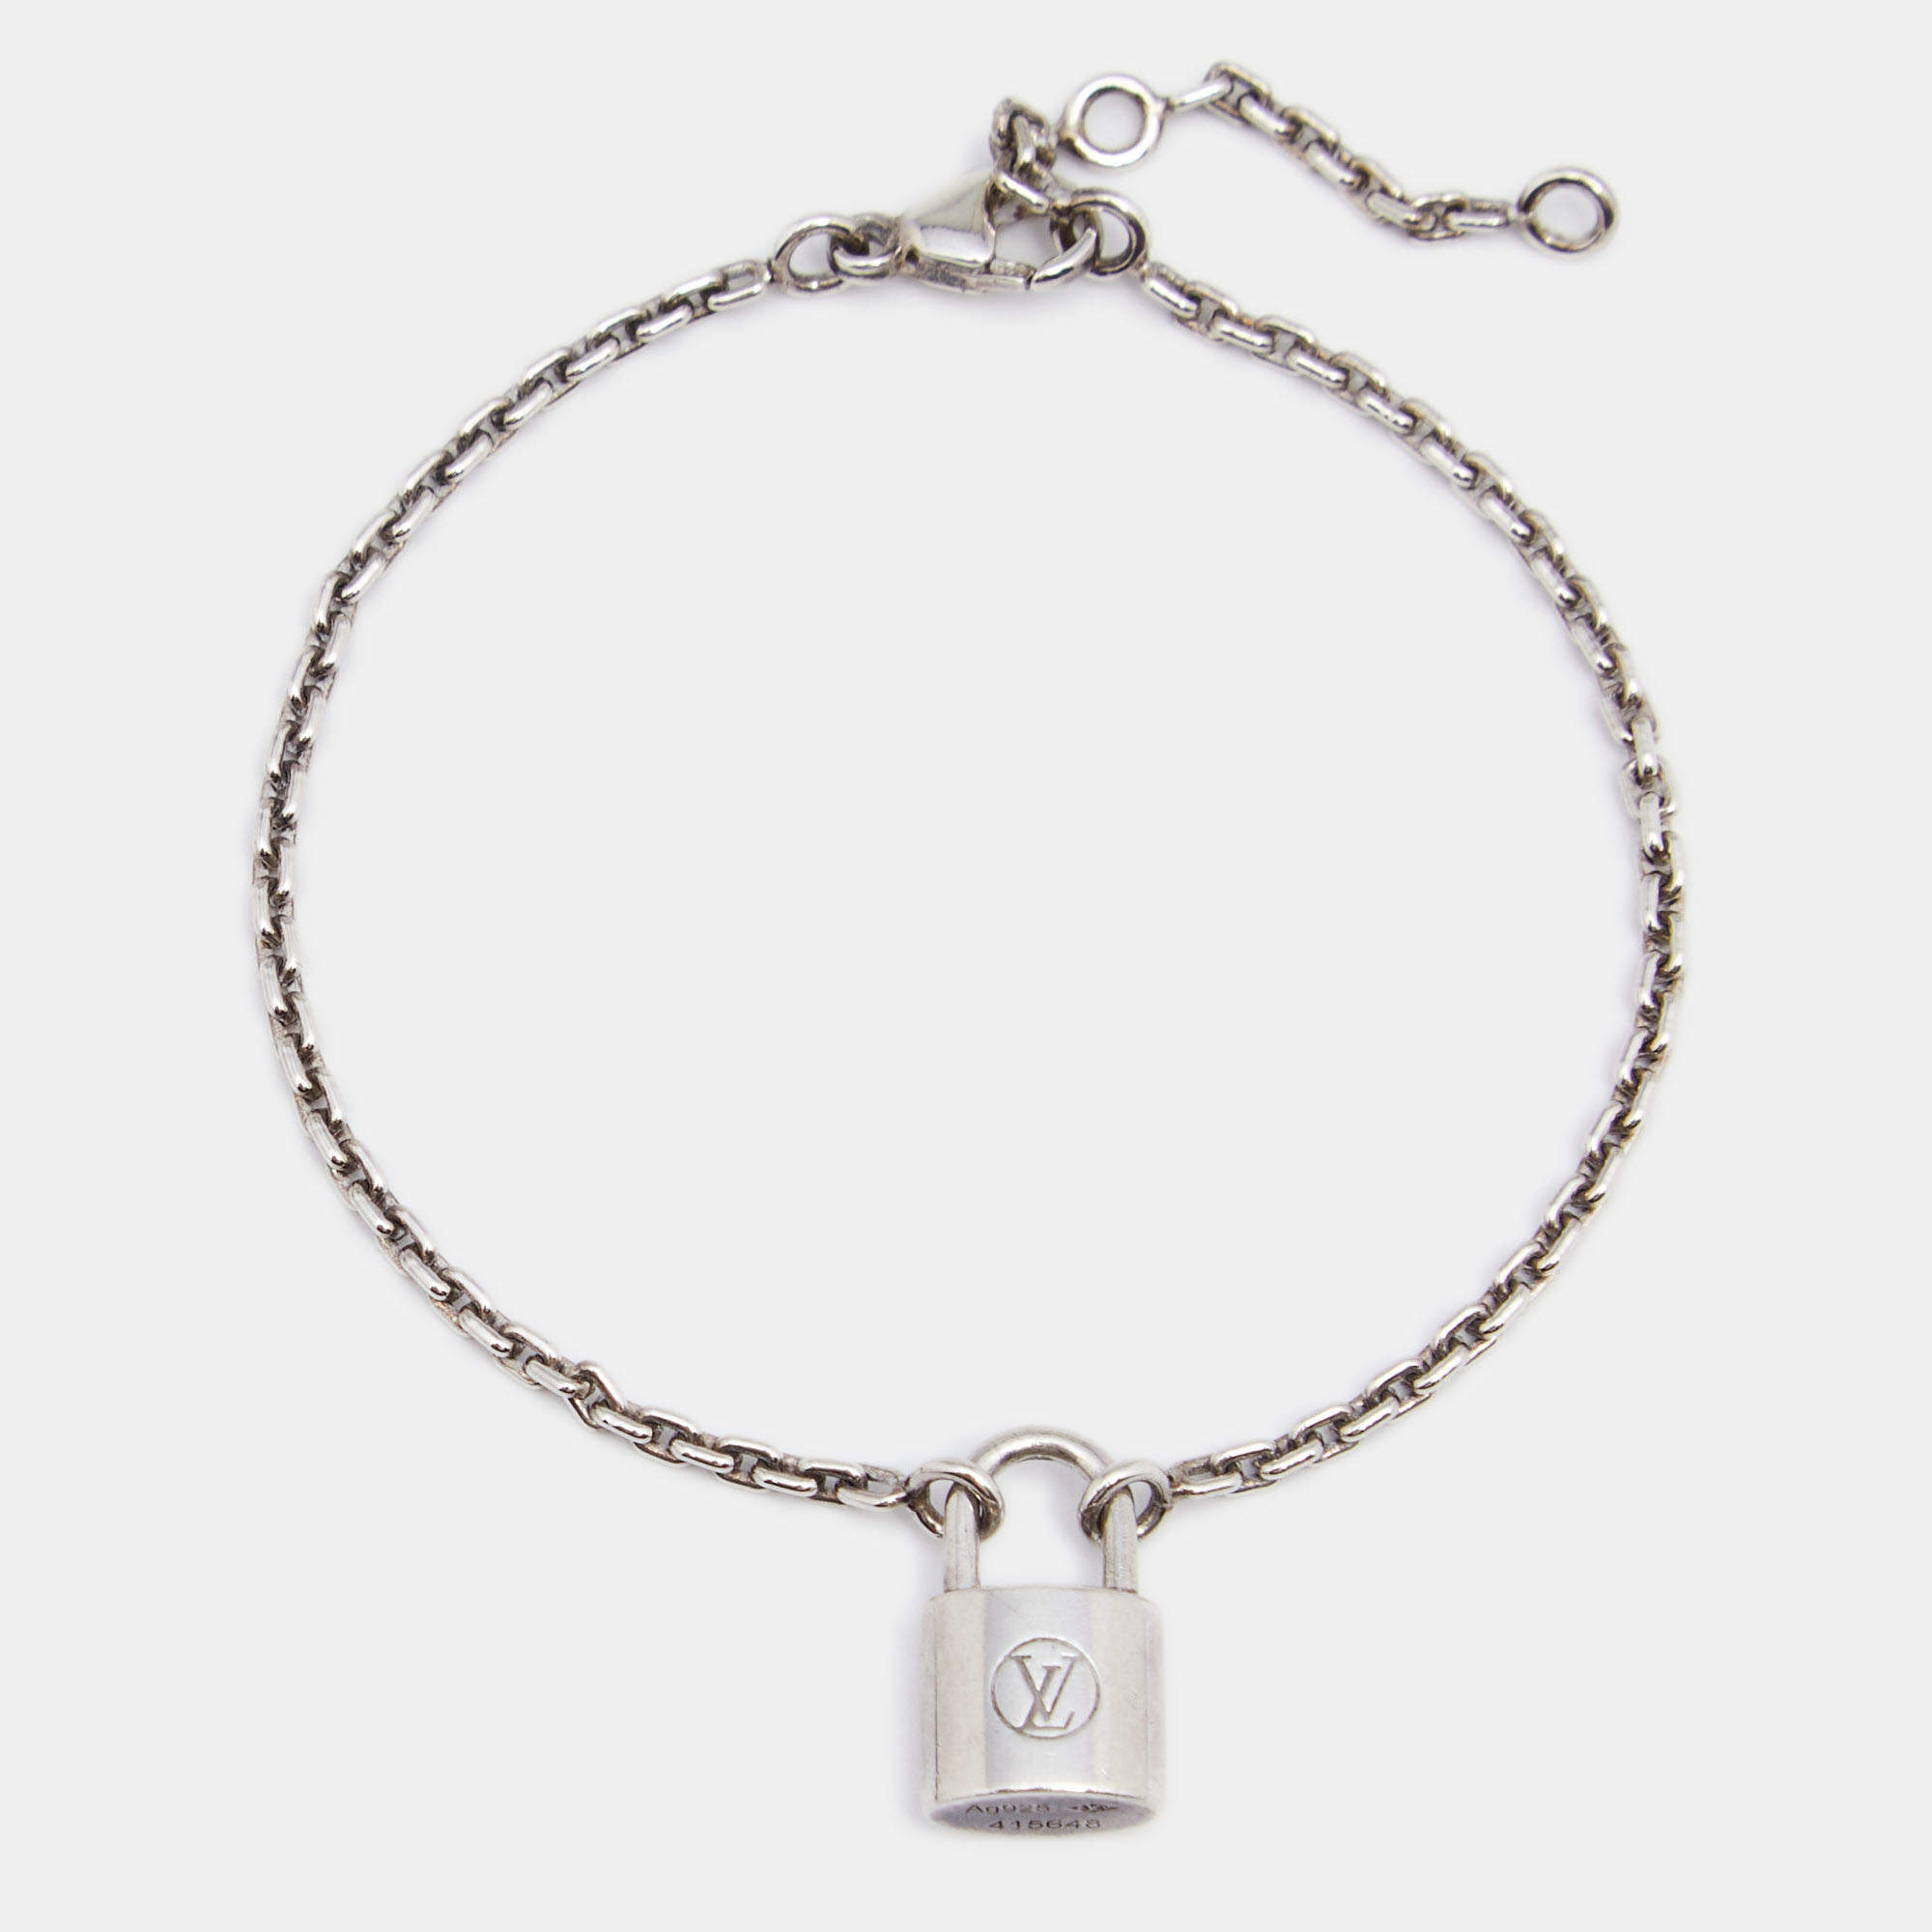 Louis Vuitton® SiLVer Lockit Bracelet, Sterling SiLVer  Fashion bracelets  jewelry, Louis vuitton bracelet, Sterling silver bracelets